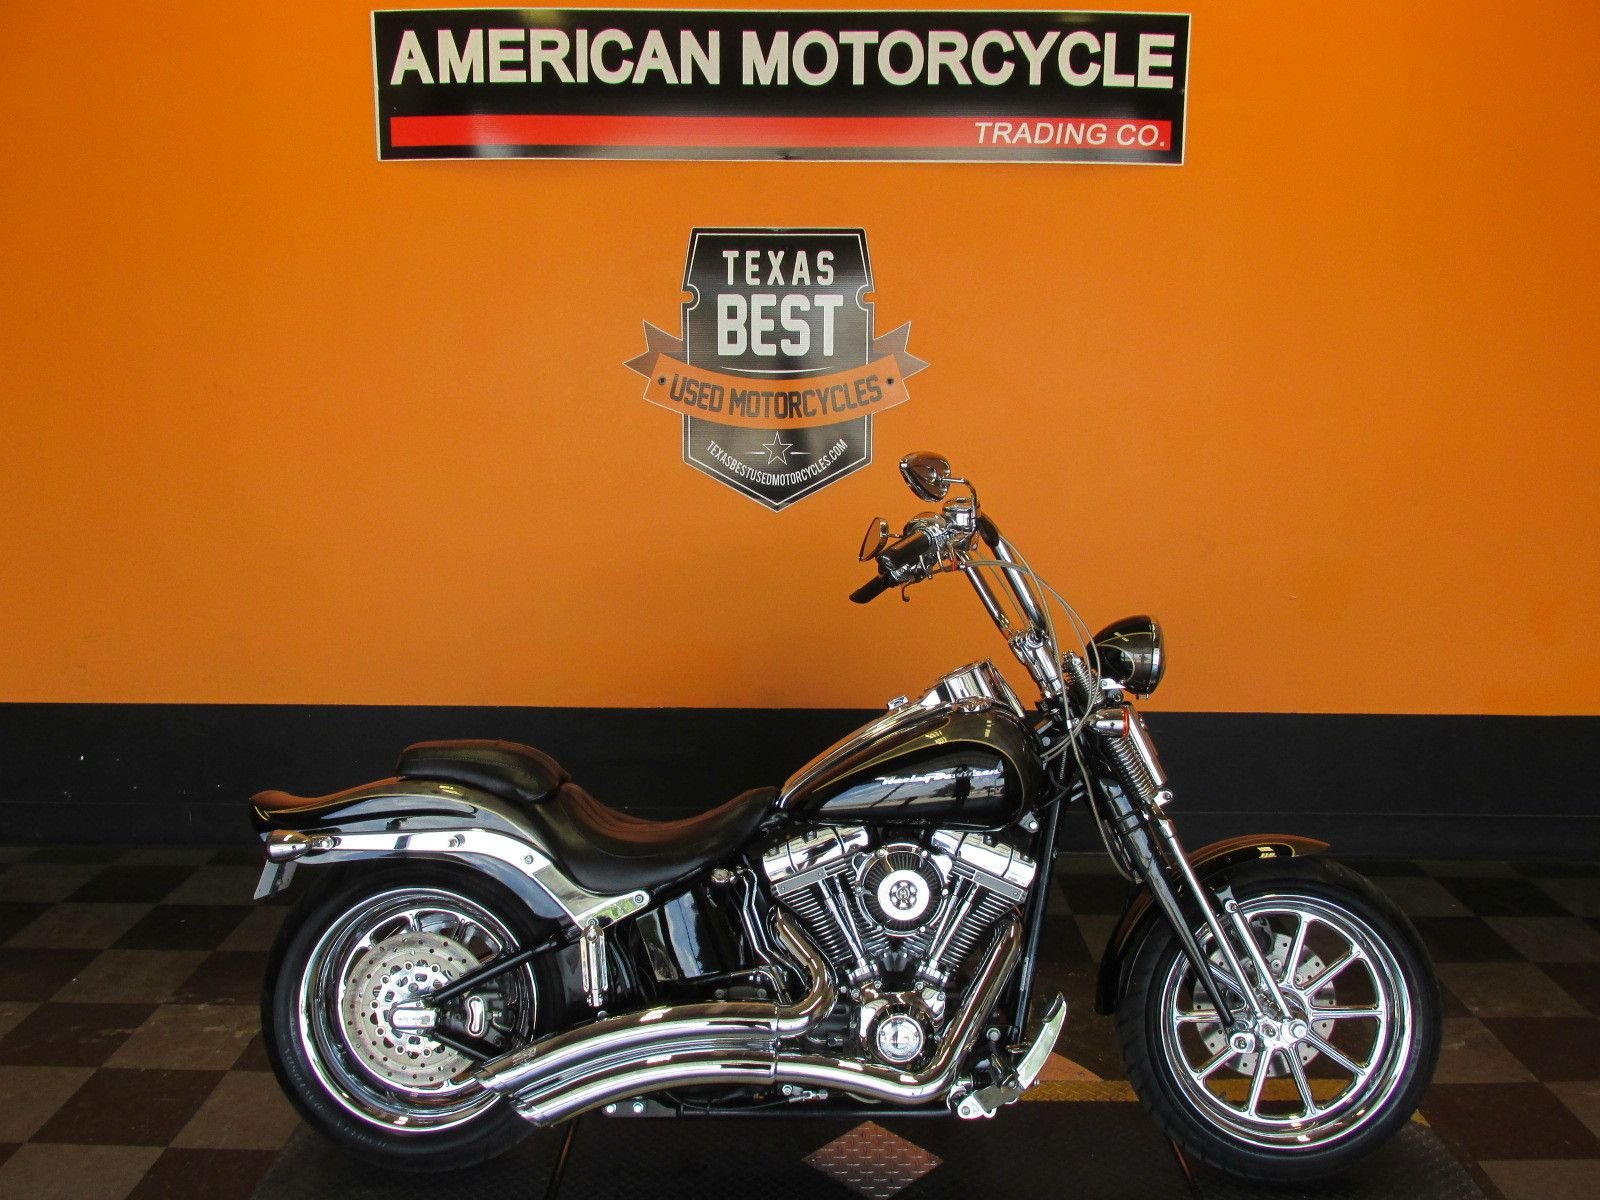 2008 Harley Davidson Cvo Softail Springer American Motorcycle Trading